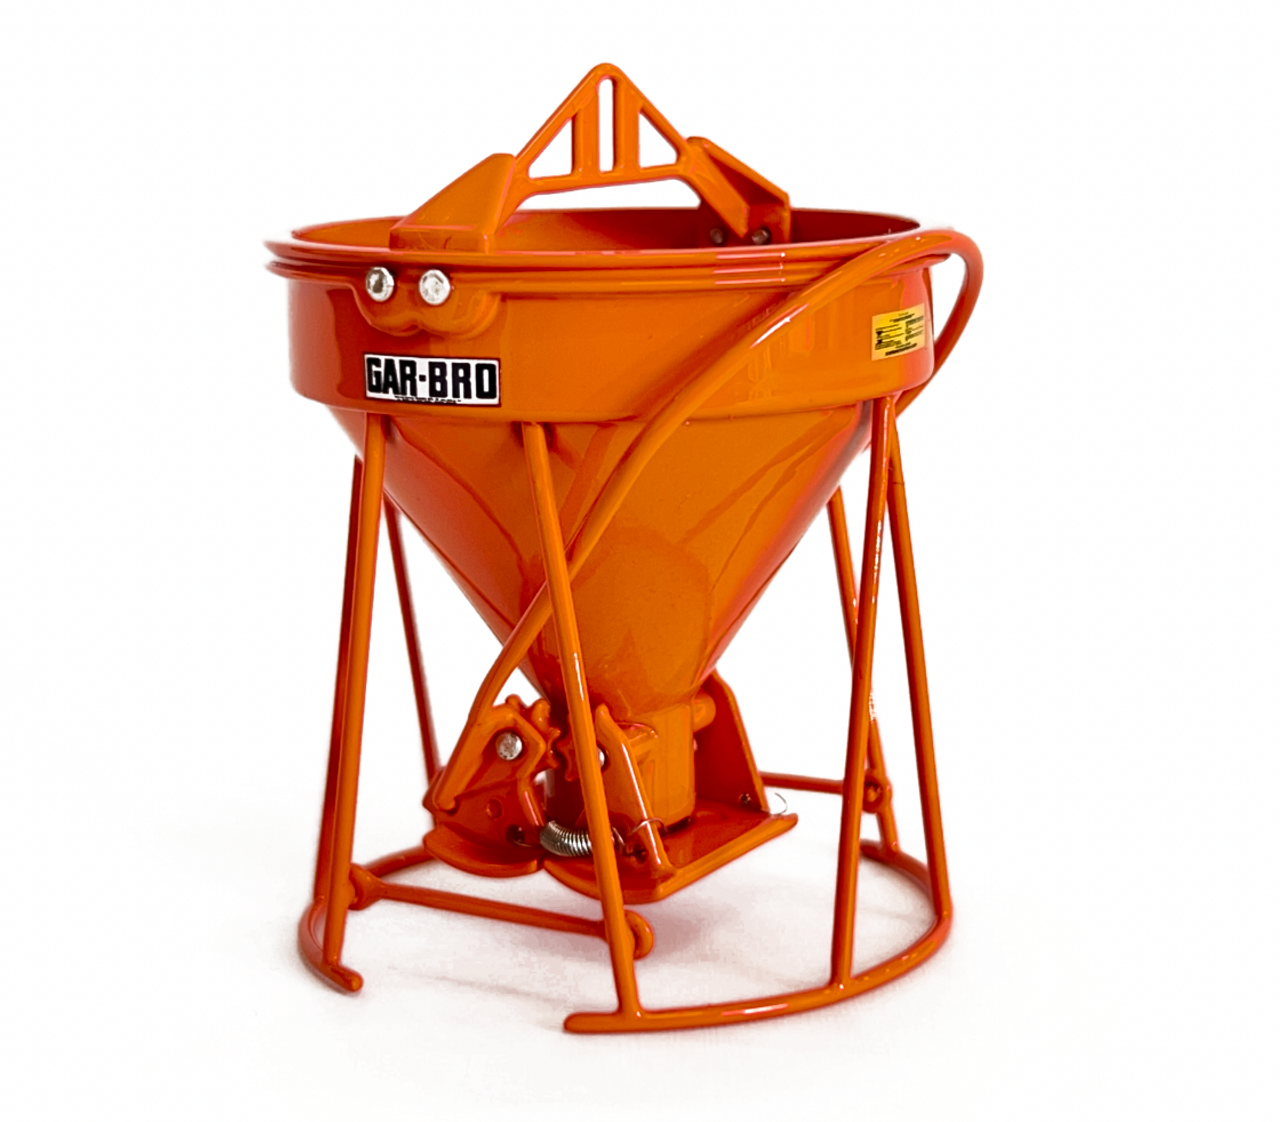 Gar-Bro "R" Series Concrete Bucket - Orange